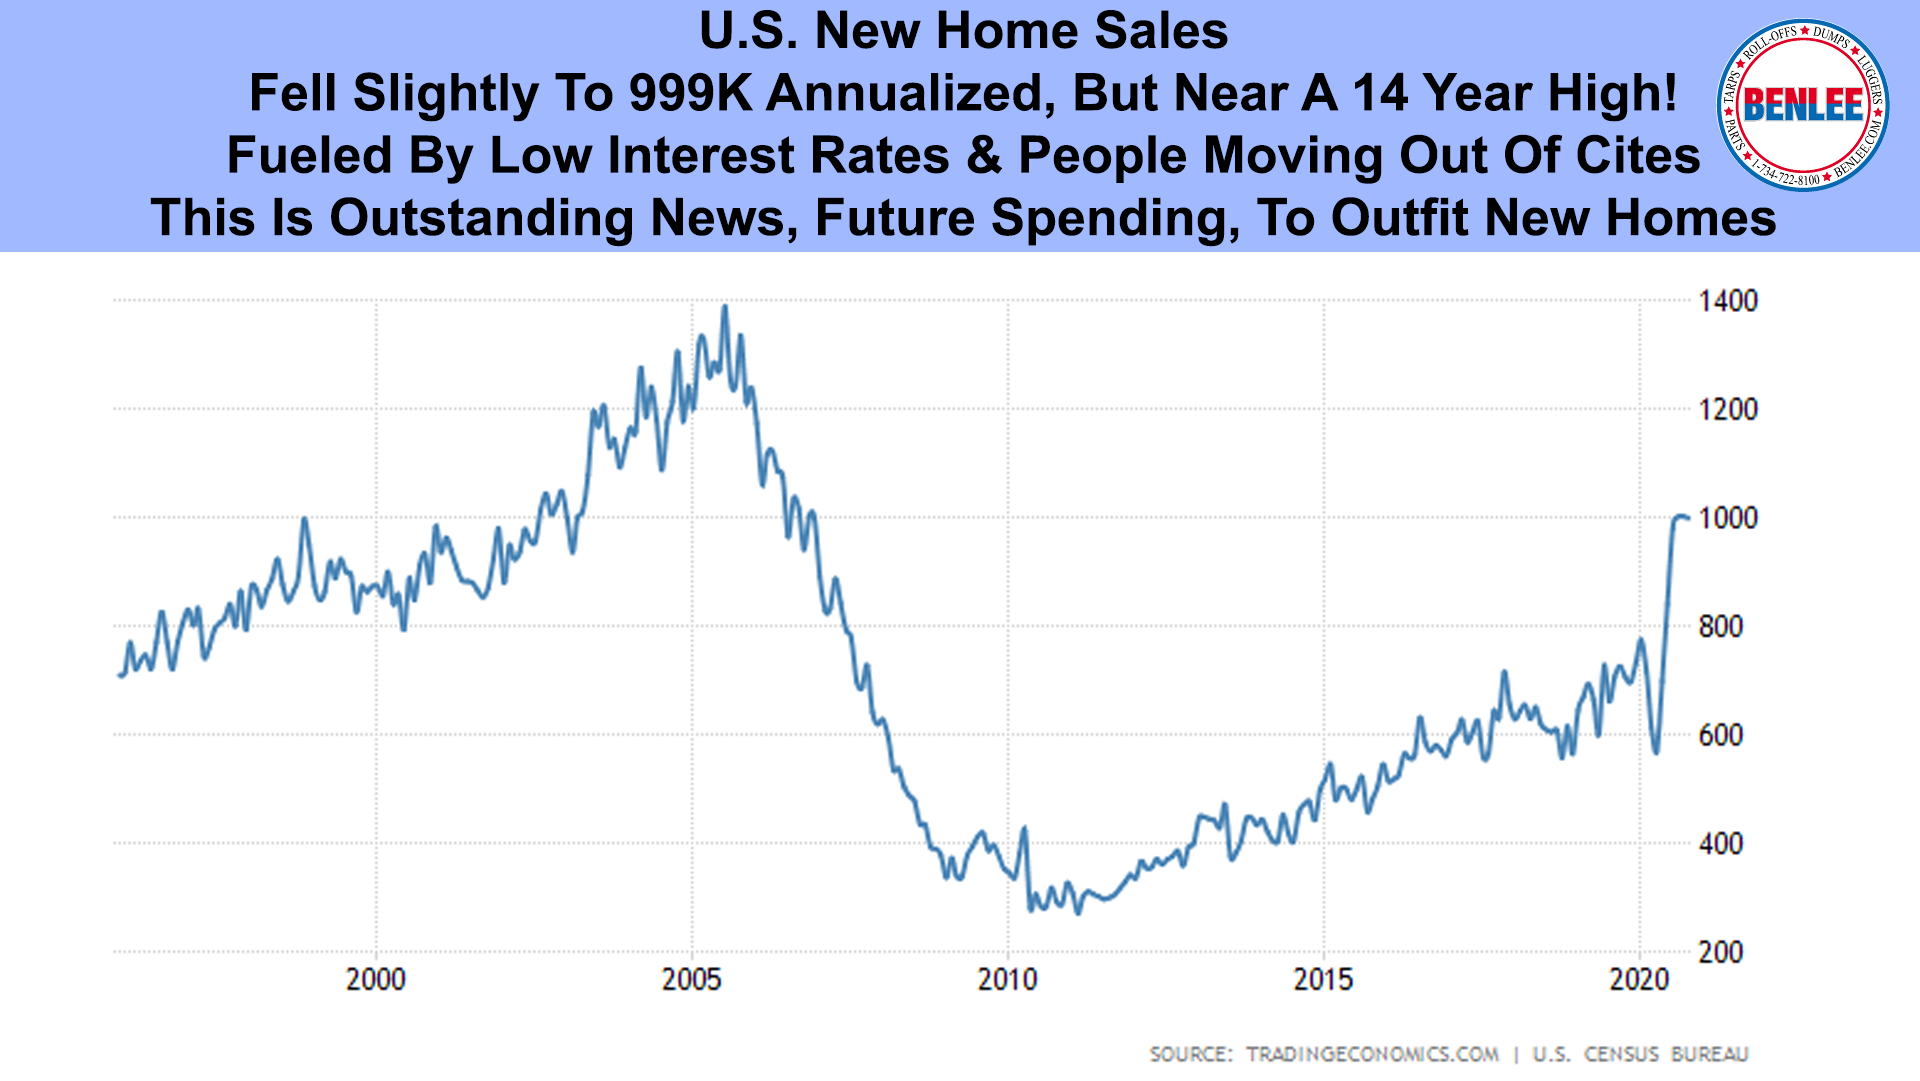 U.S. New Home Sales